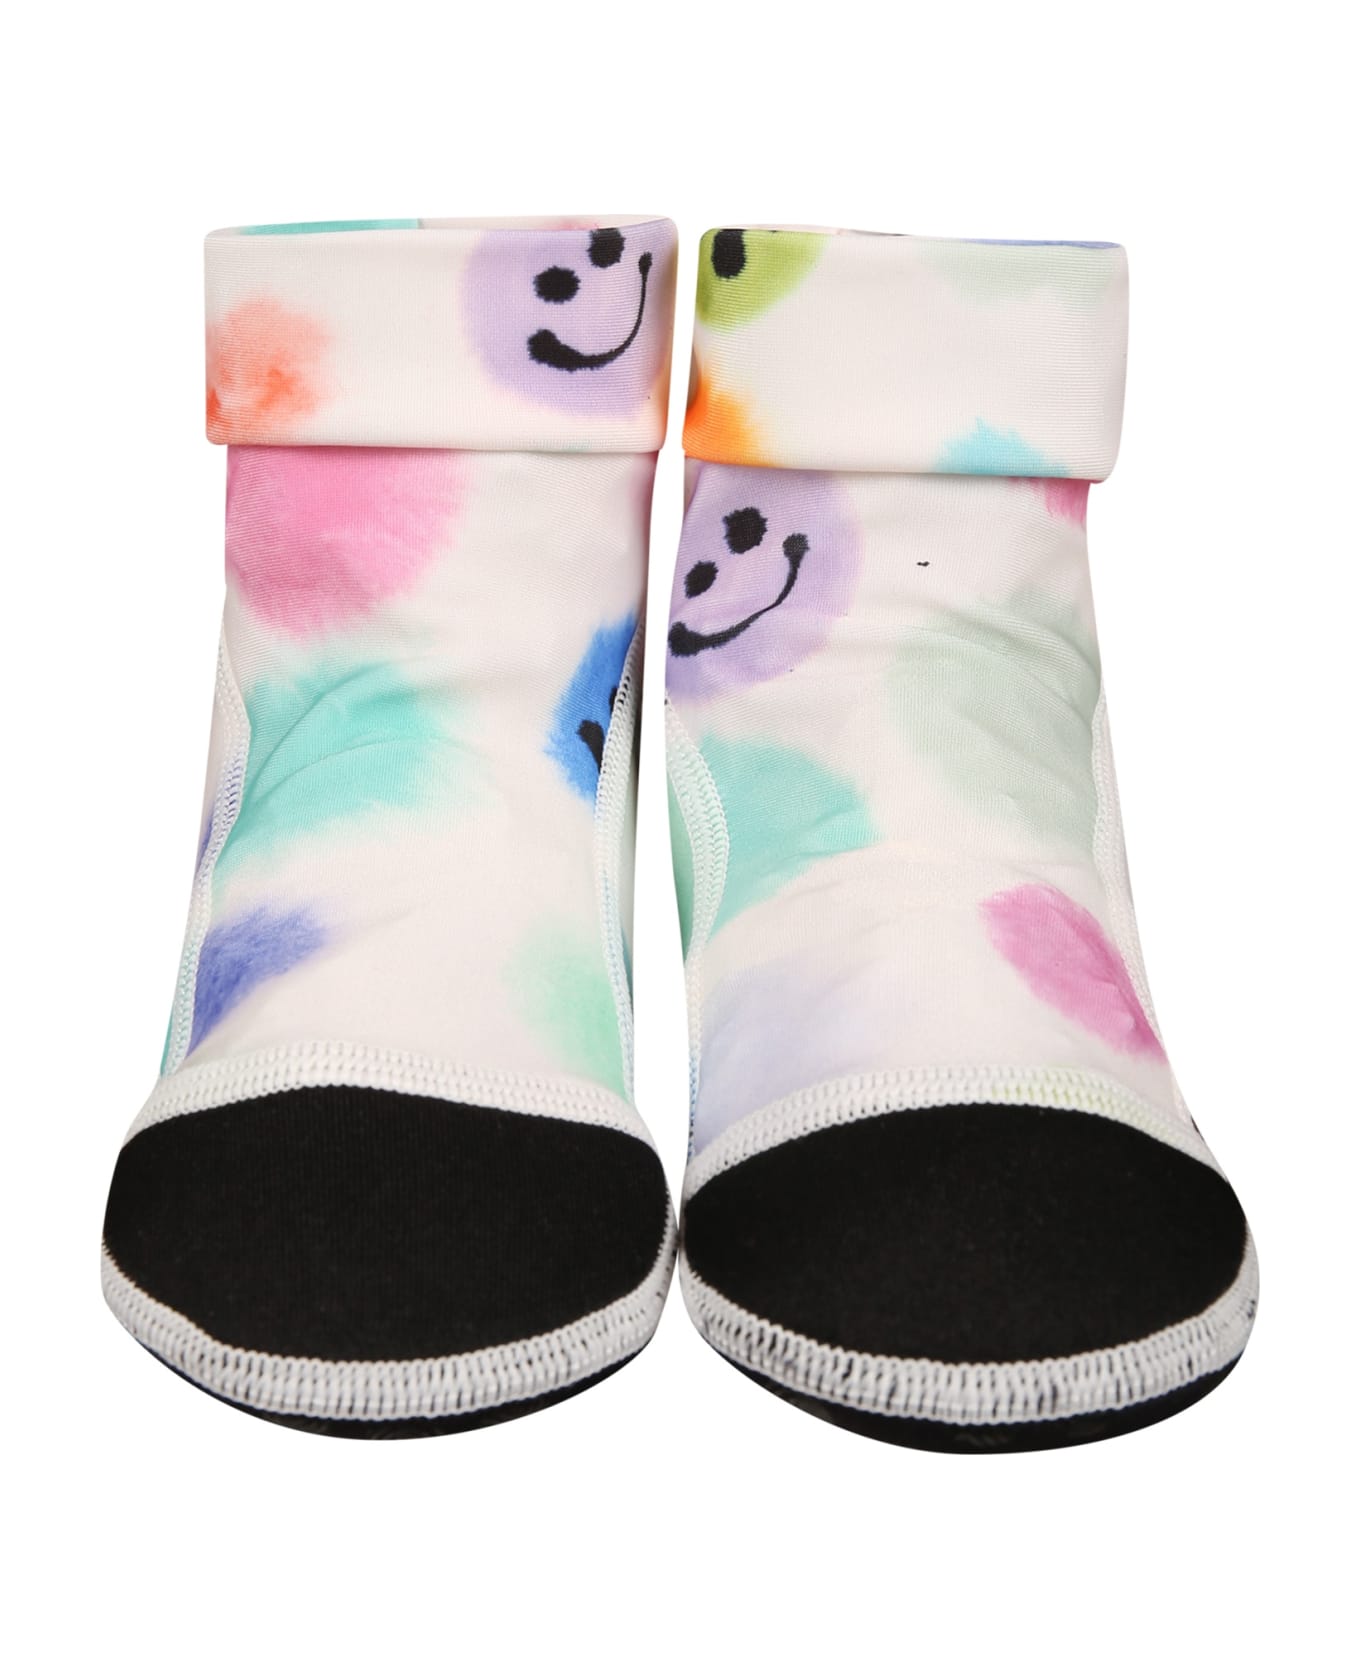 Molo Multicolor Beach Socks For Kids With Smiley - Multicolor